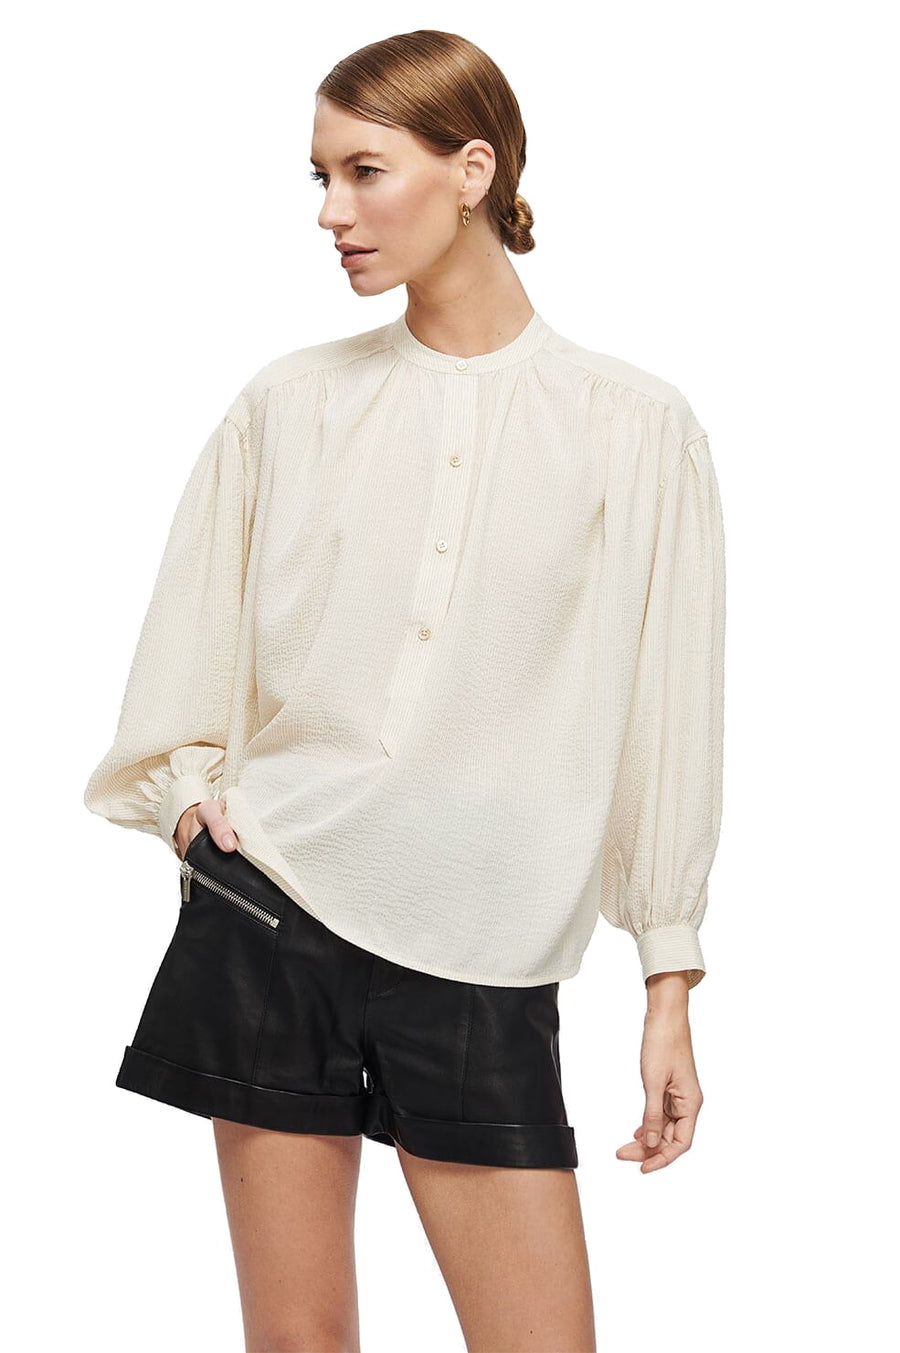 Eden Shirt - Cream and Black Stripe - Shop Yu Fashion